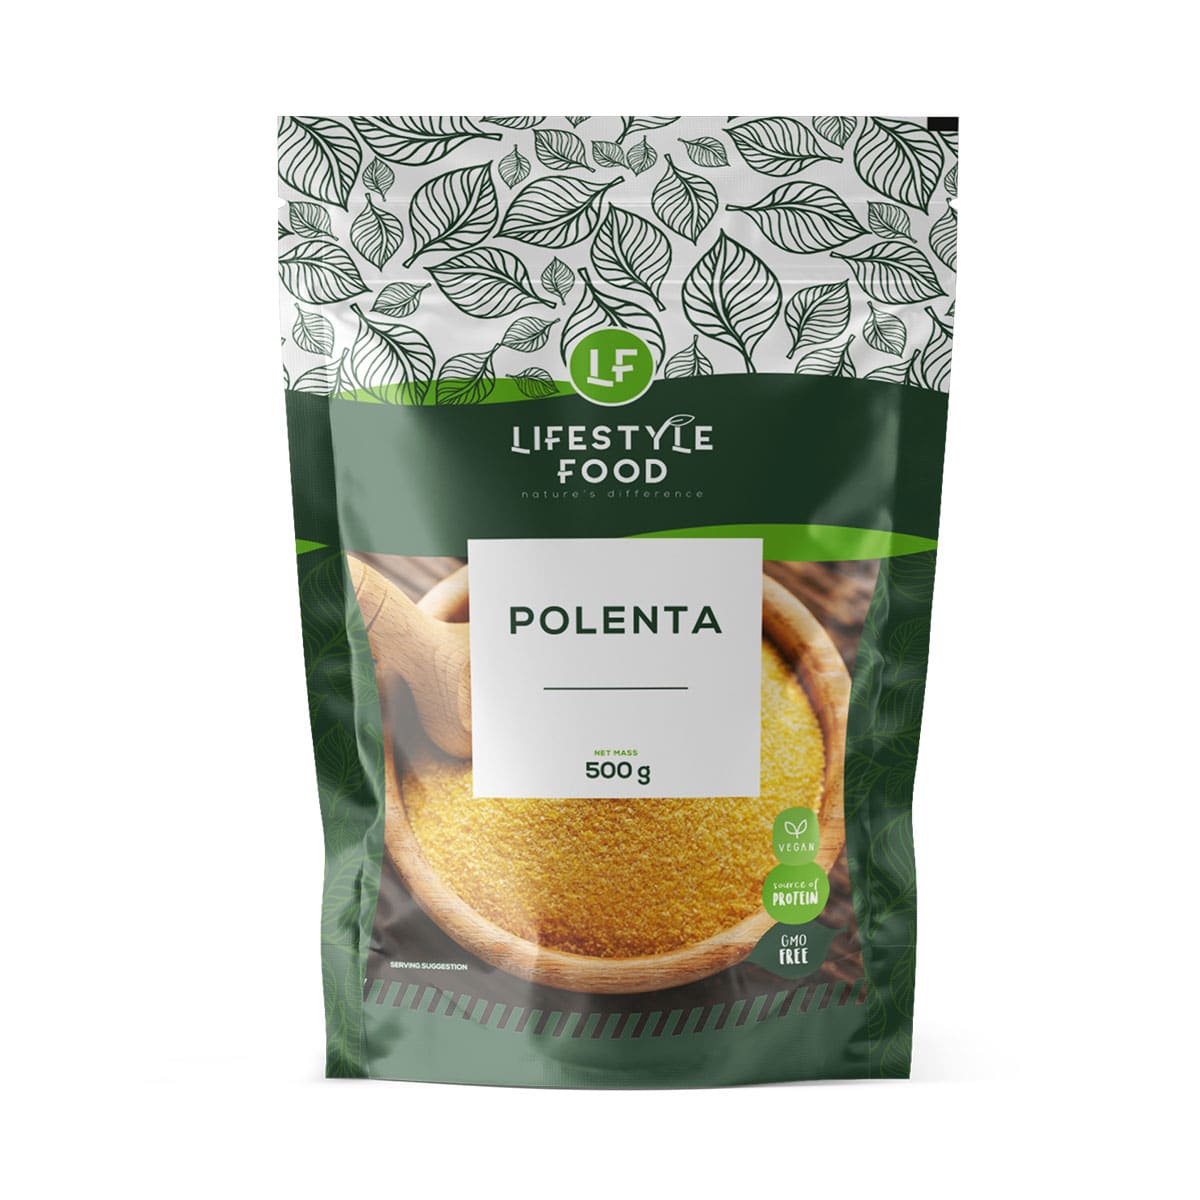 Lifestyle Food Polenta - 500g